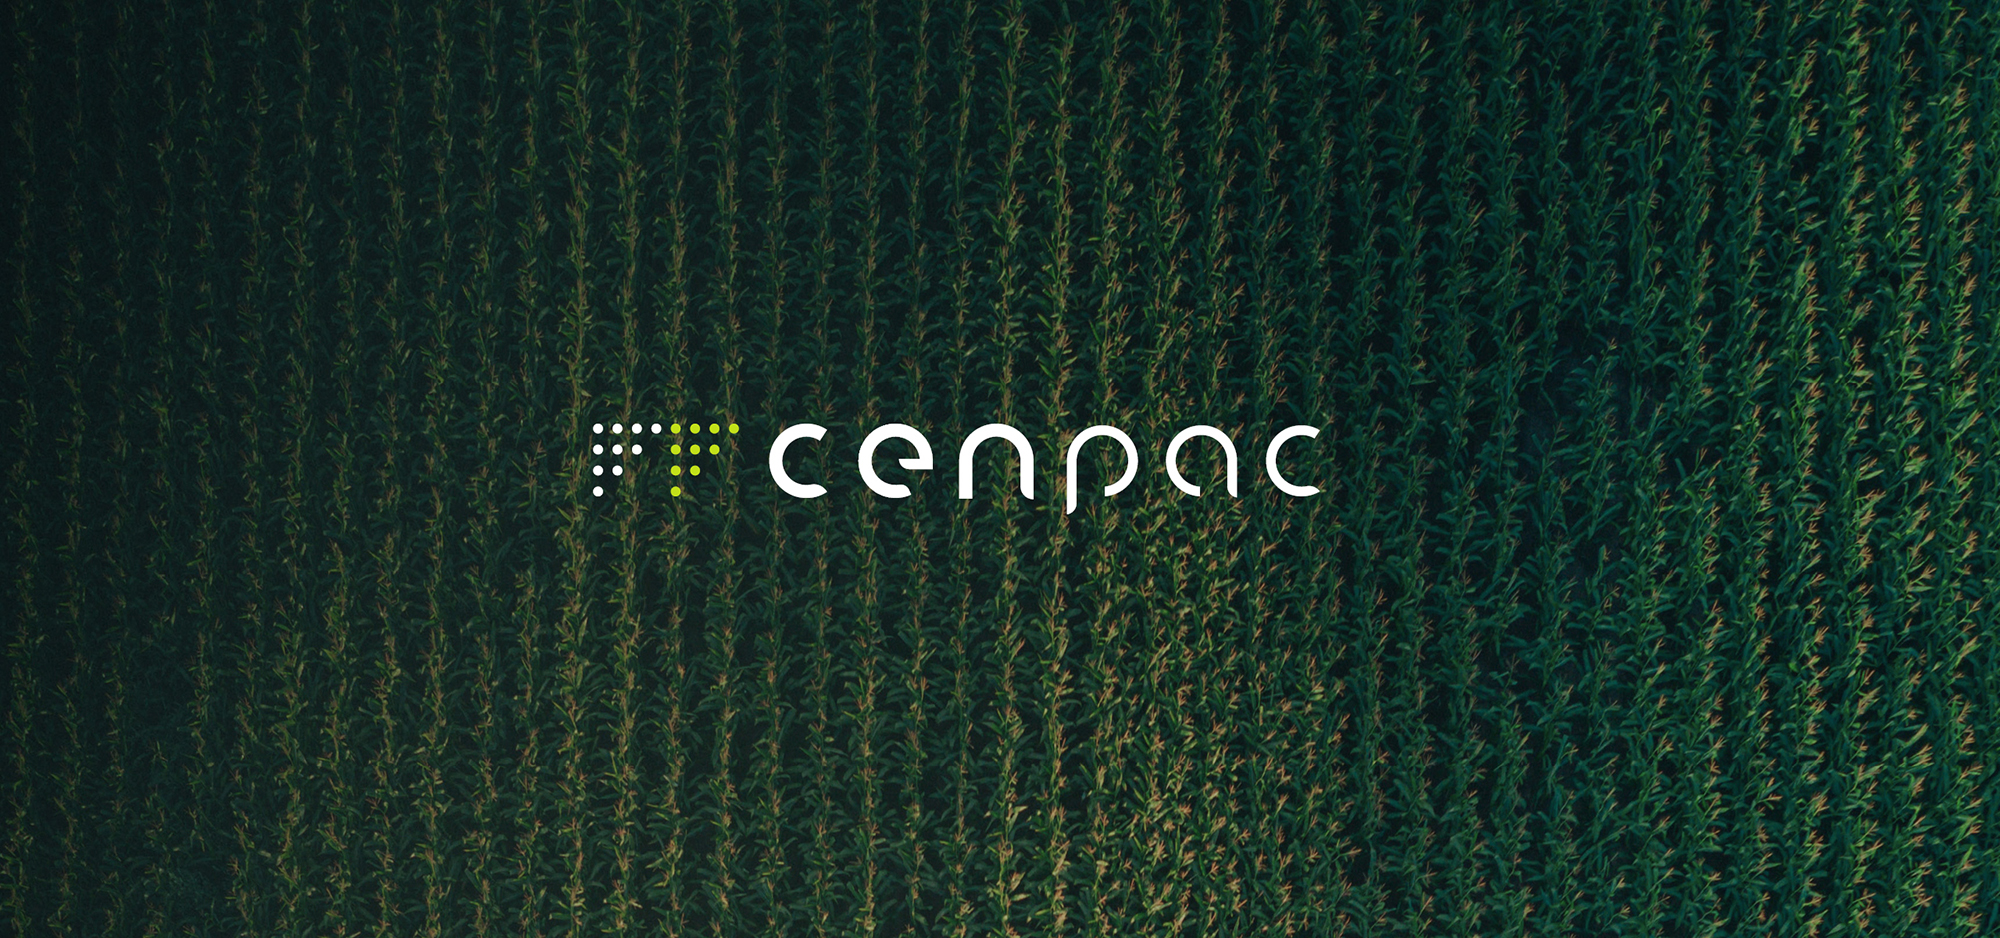 Cenpac full lockup logo design on grass background